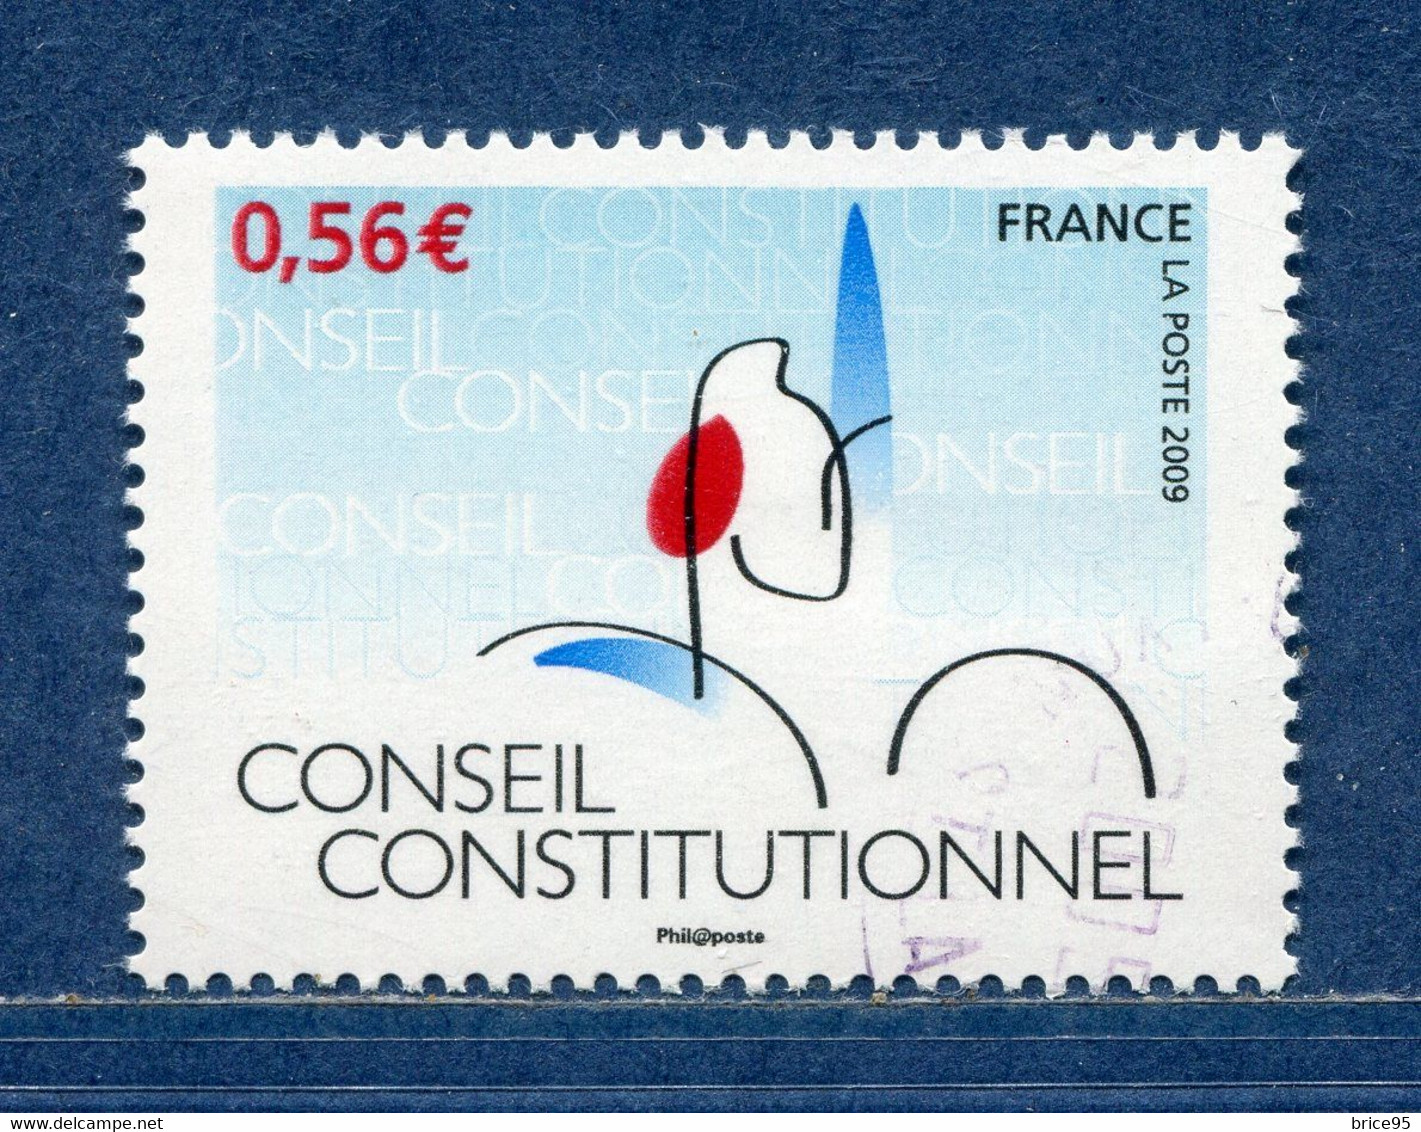 ⭐ France - YT Nº 4347 - Oblitéré Dos Neuf Sans Charnière - 2009 ⭐ - Used Stamps